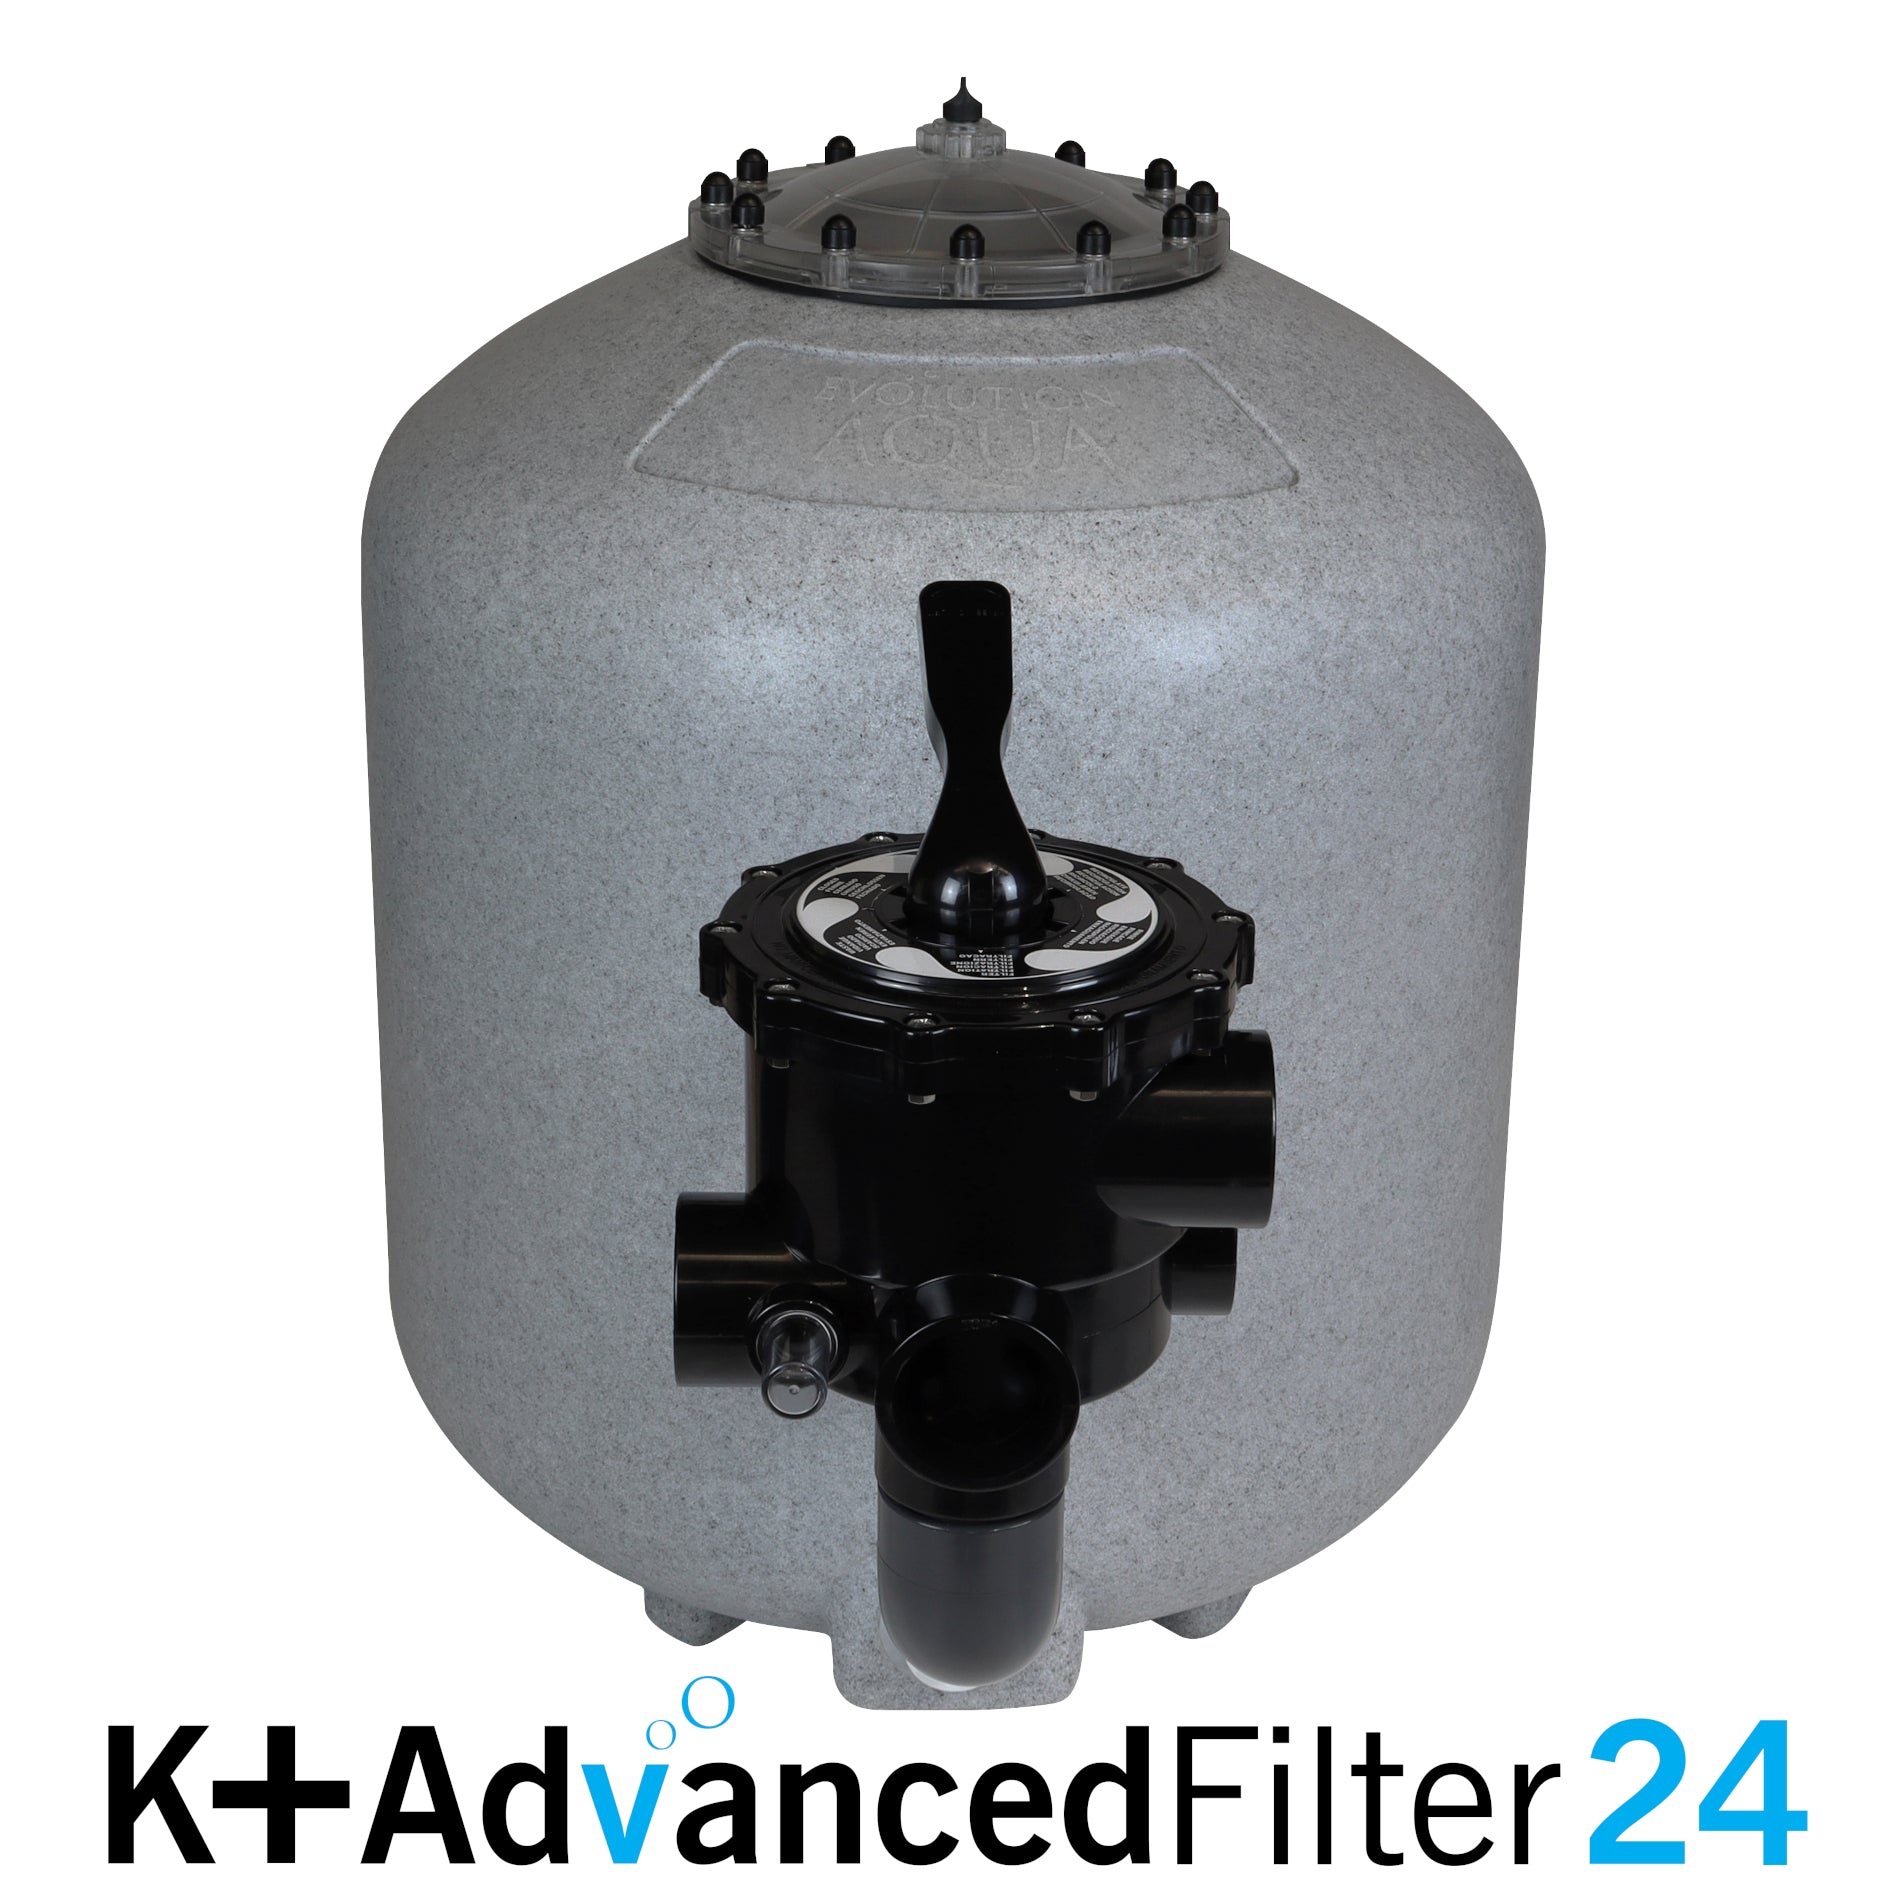 Evolution Aqua Pressure Pond K+ Advanced Filter 24